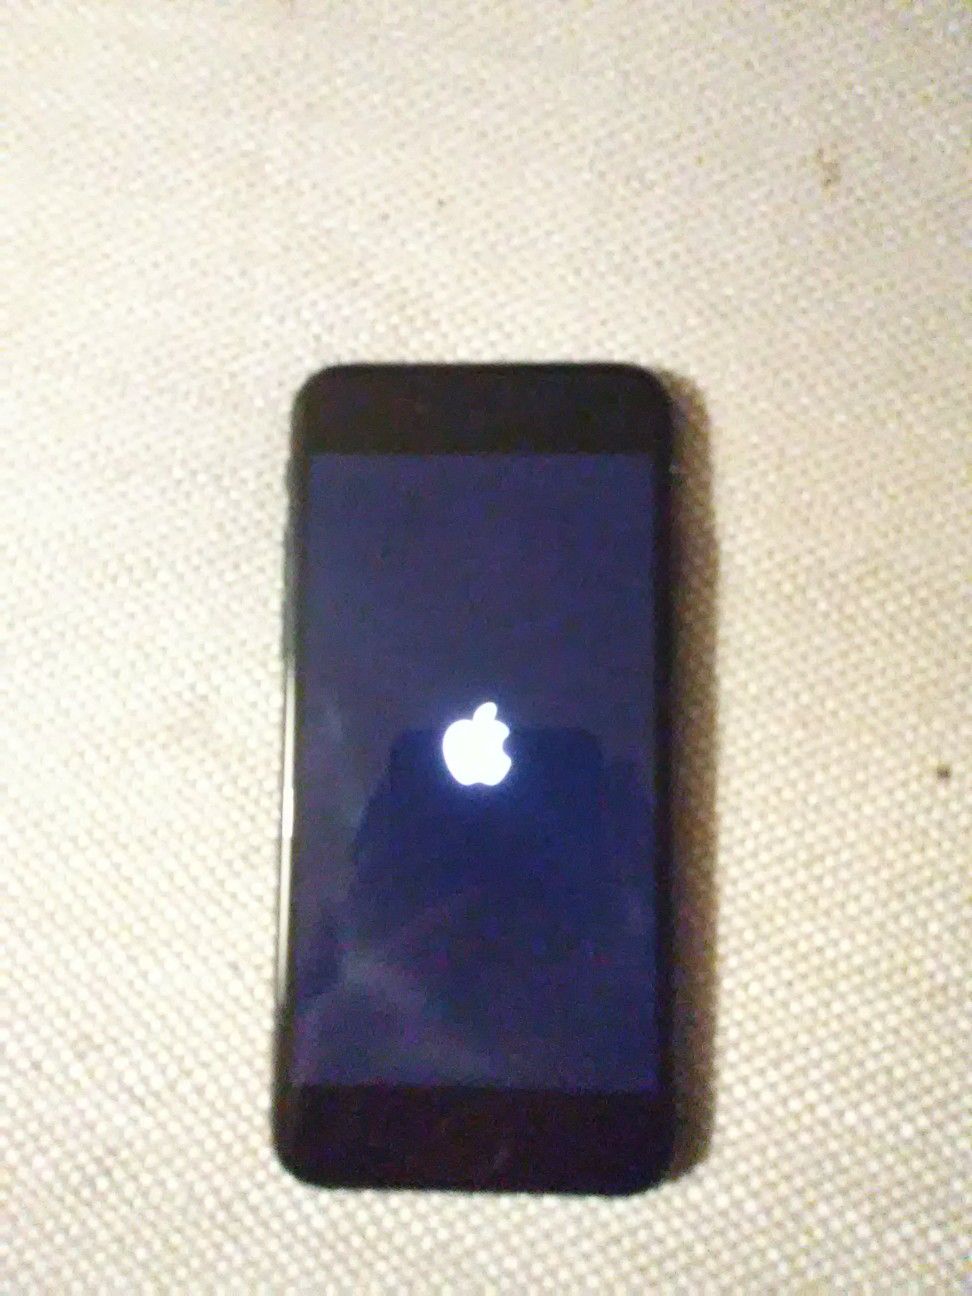 Apple iPhone 7 Matte Black Model A1660